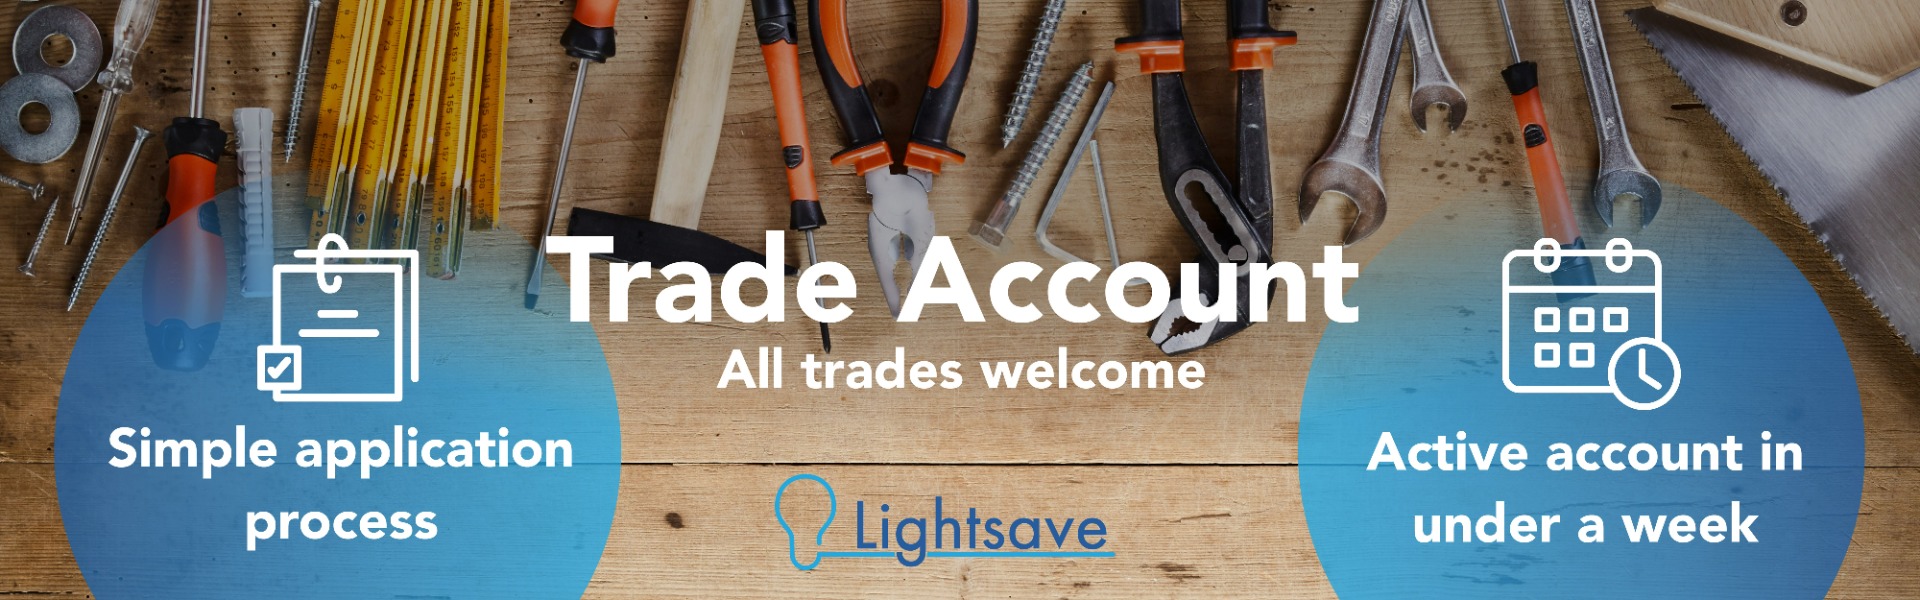 lightsave trade account